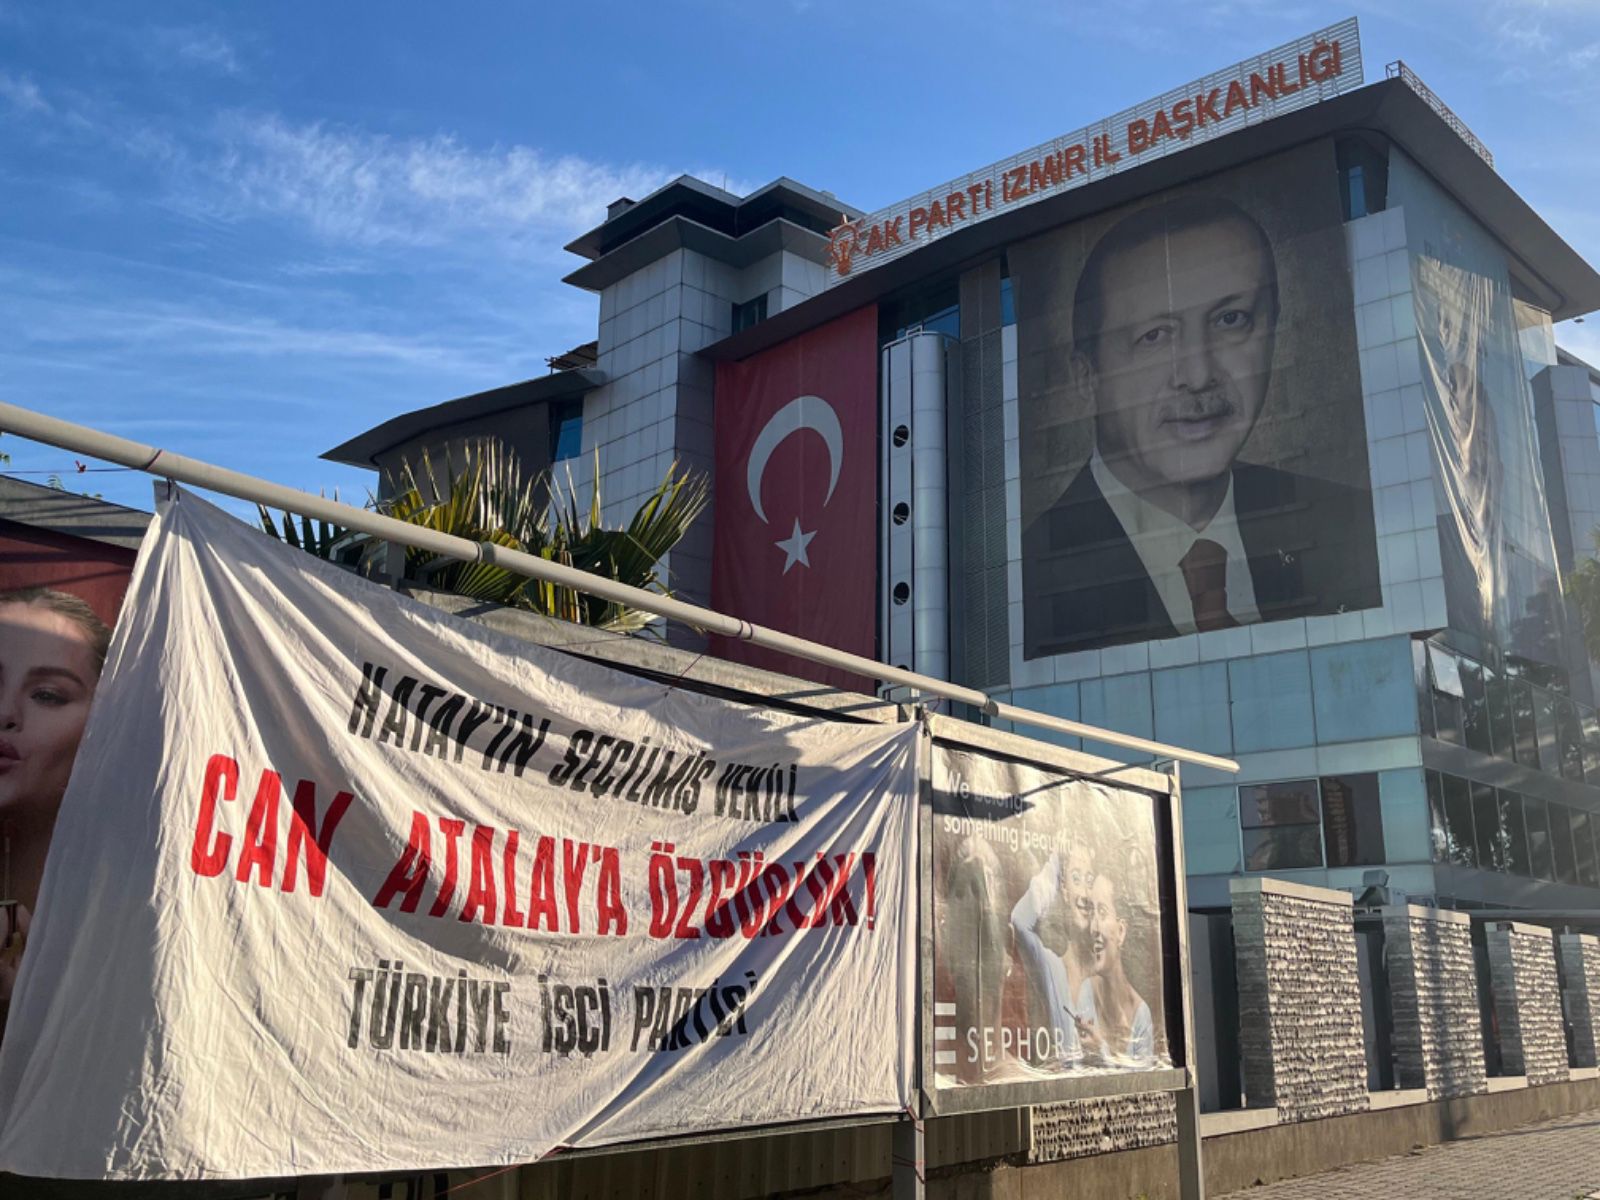 AK Parti il binasına ‘Can Atalay’ pankartı